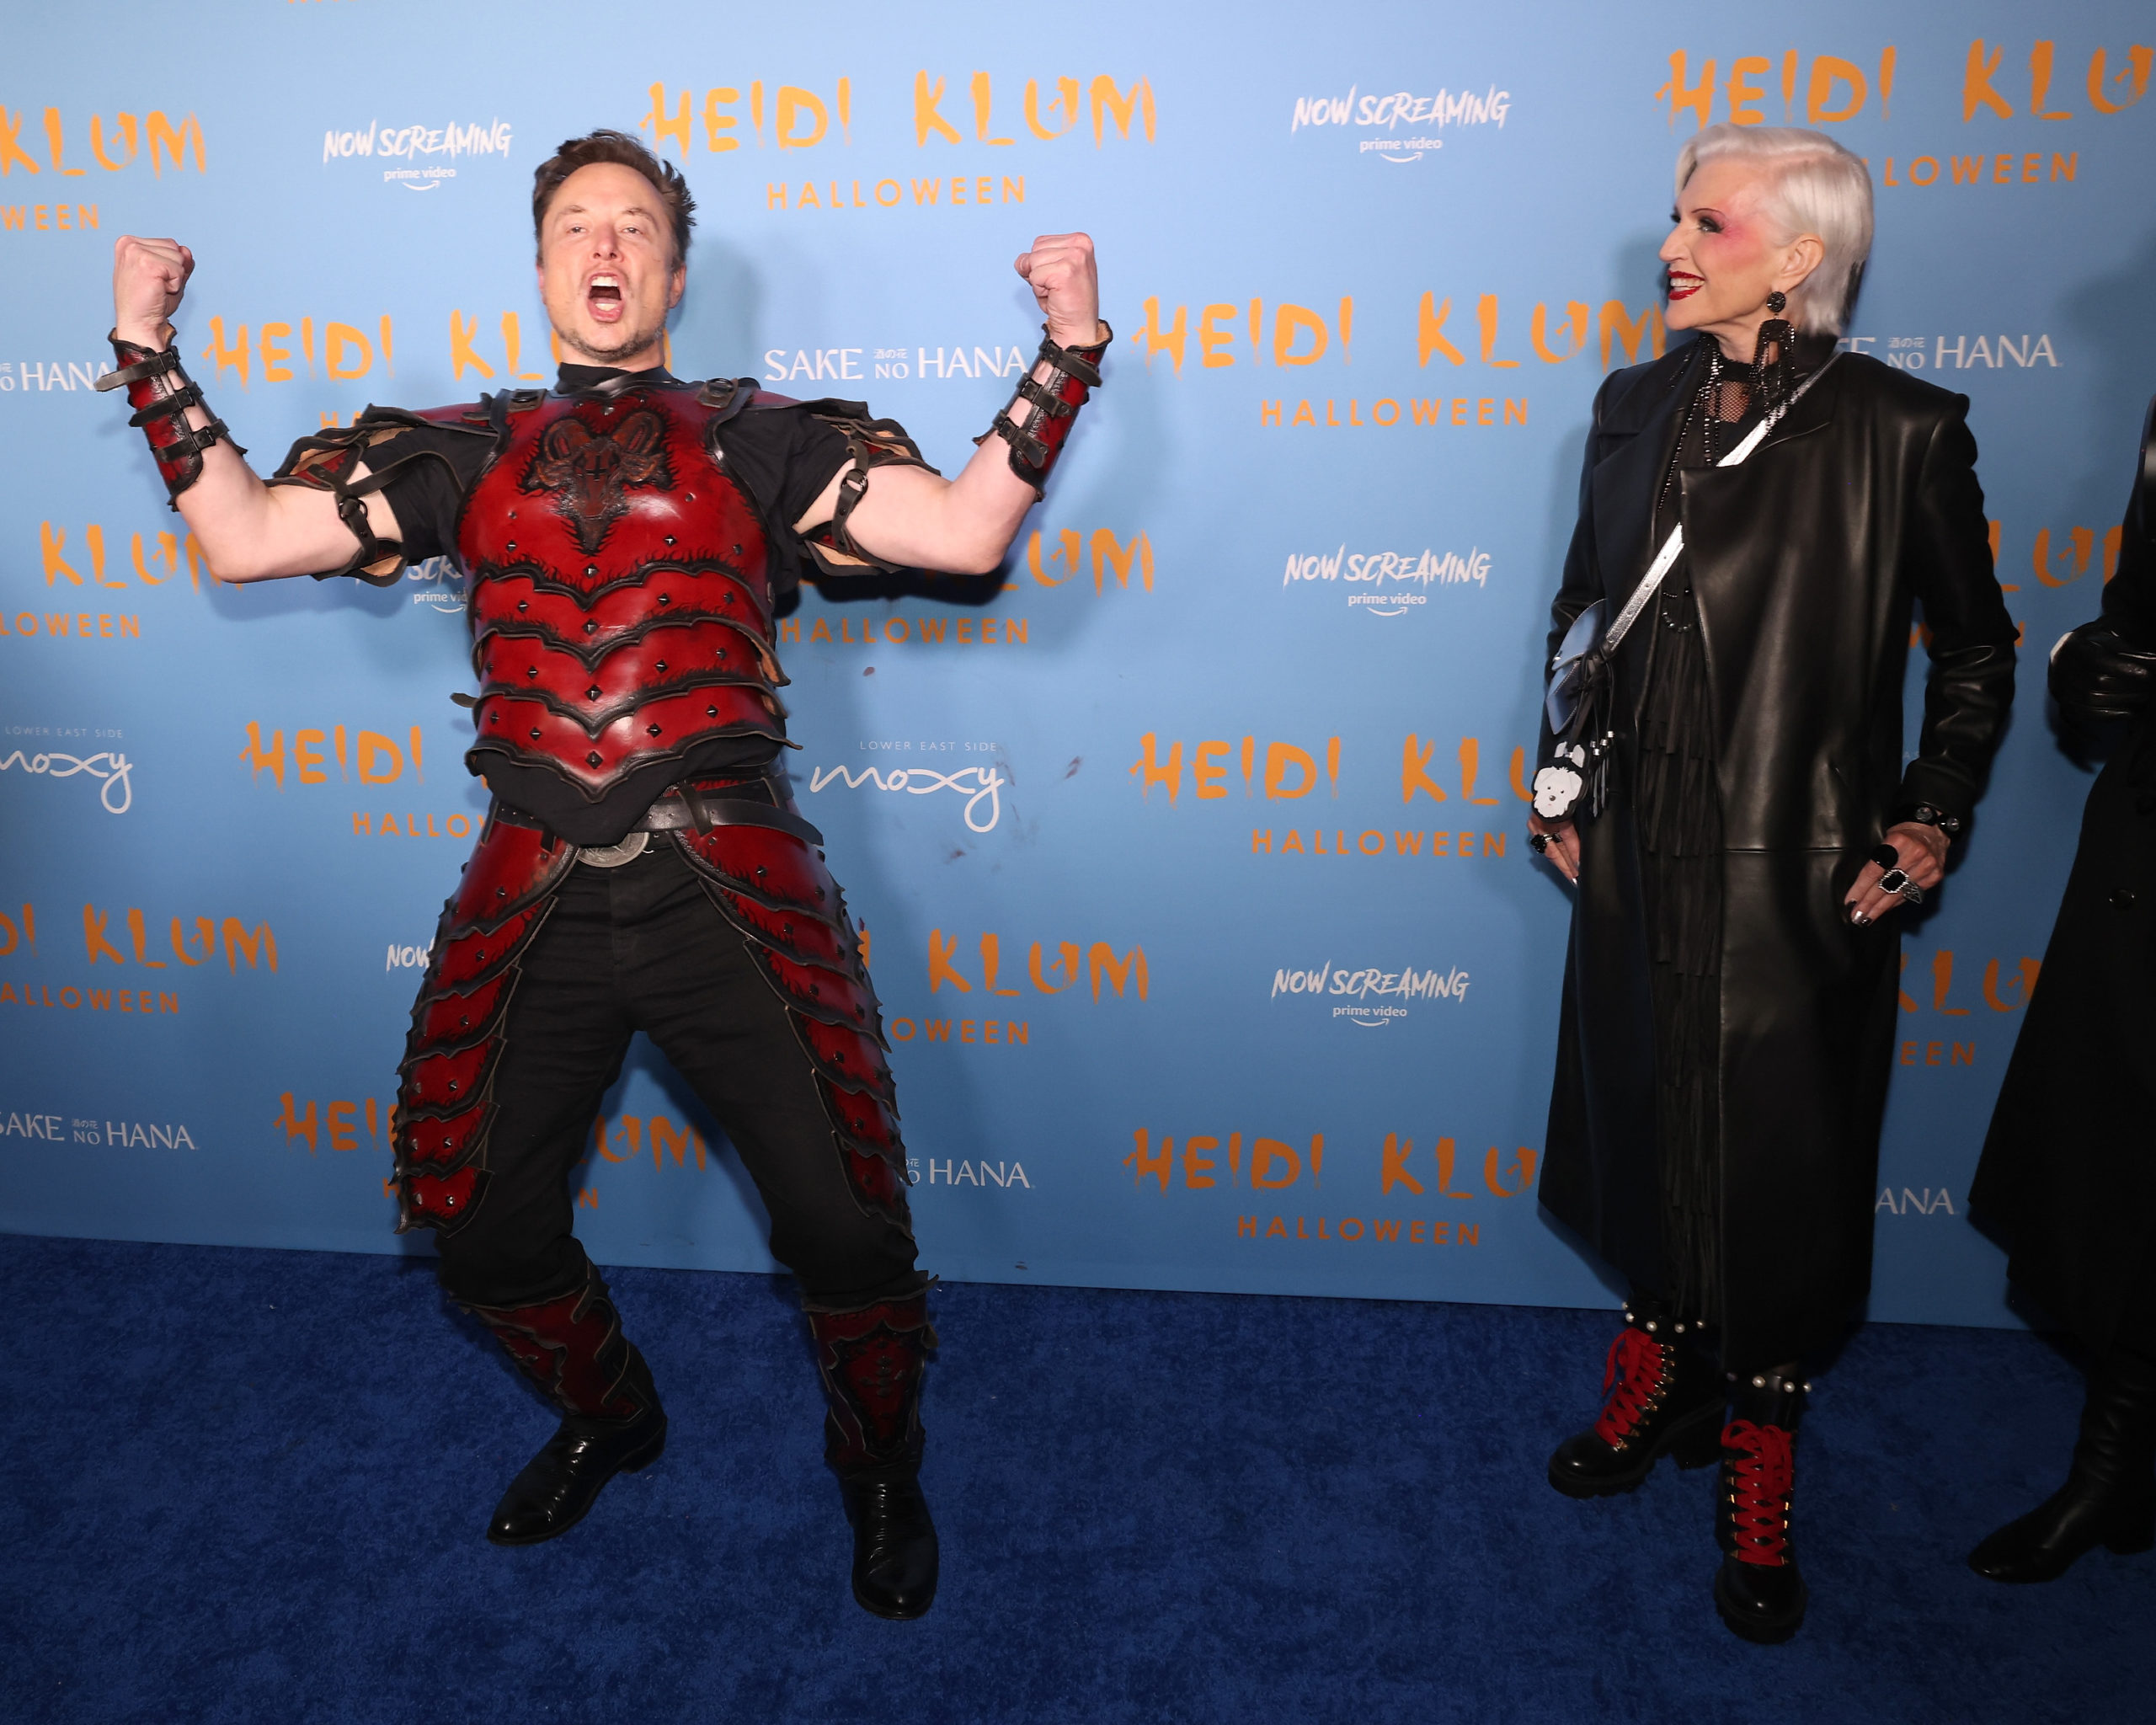 Elon Musk Attends Heidi Klum’s Halloween Party in Costume With Hefty